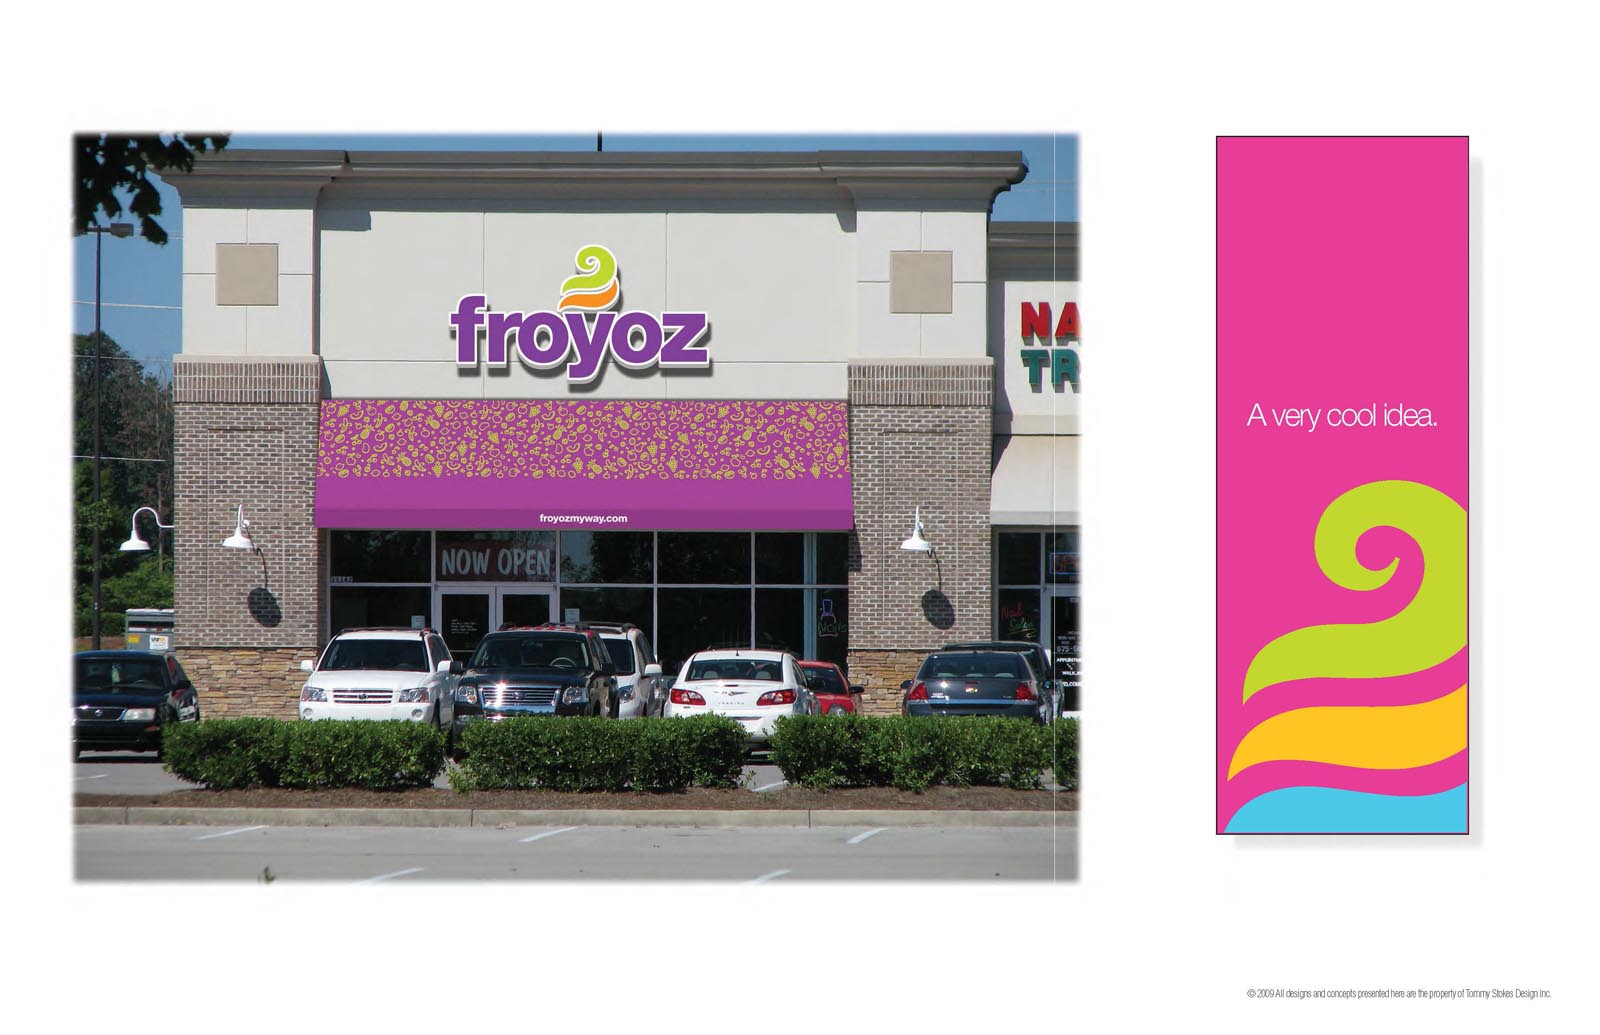 Froyoz Brand Development